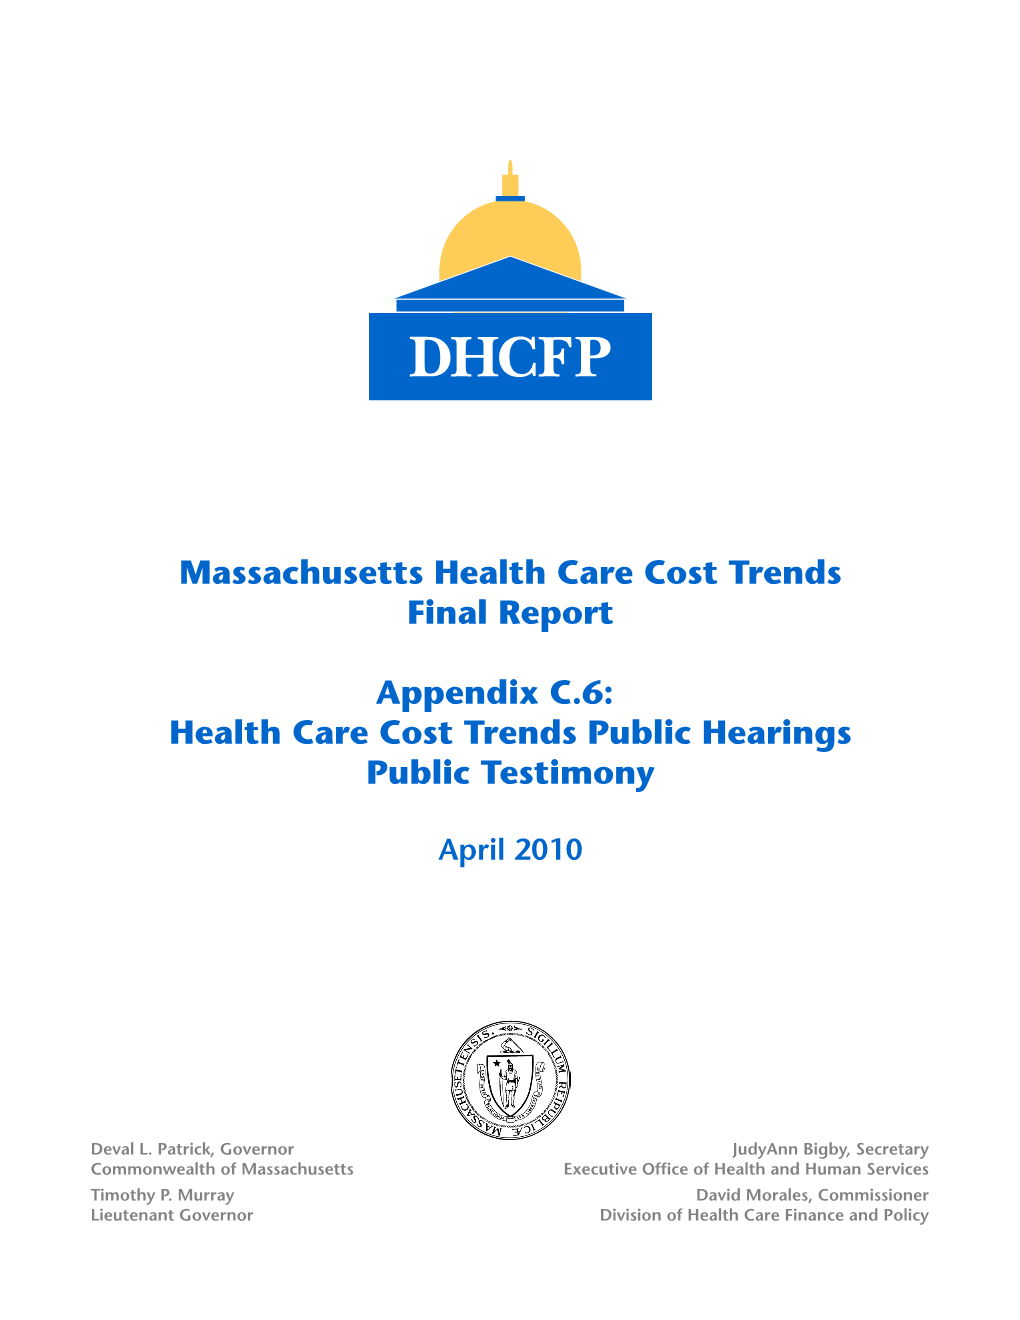 Appendix C.6: Health Care Cost Trends Public Hearings Public Testimony